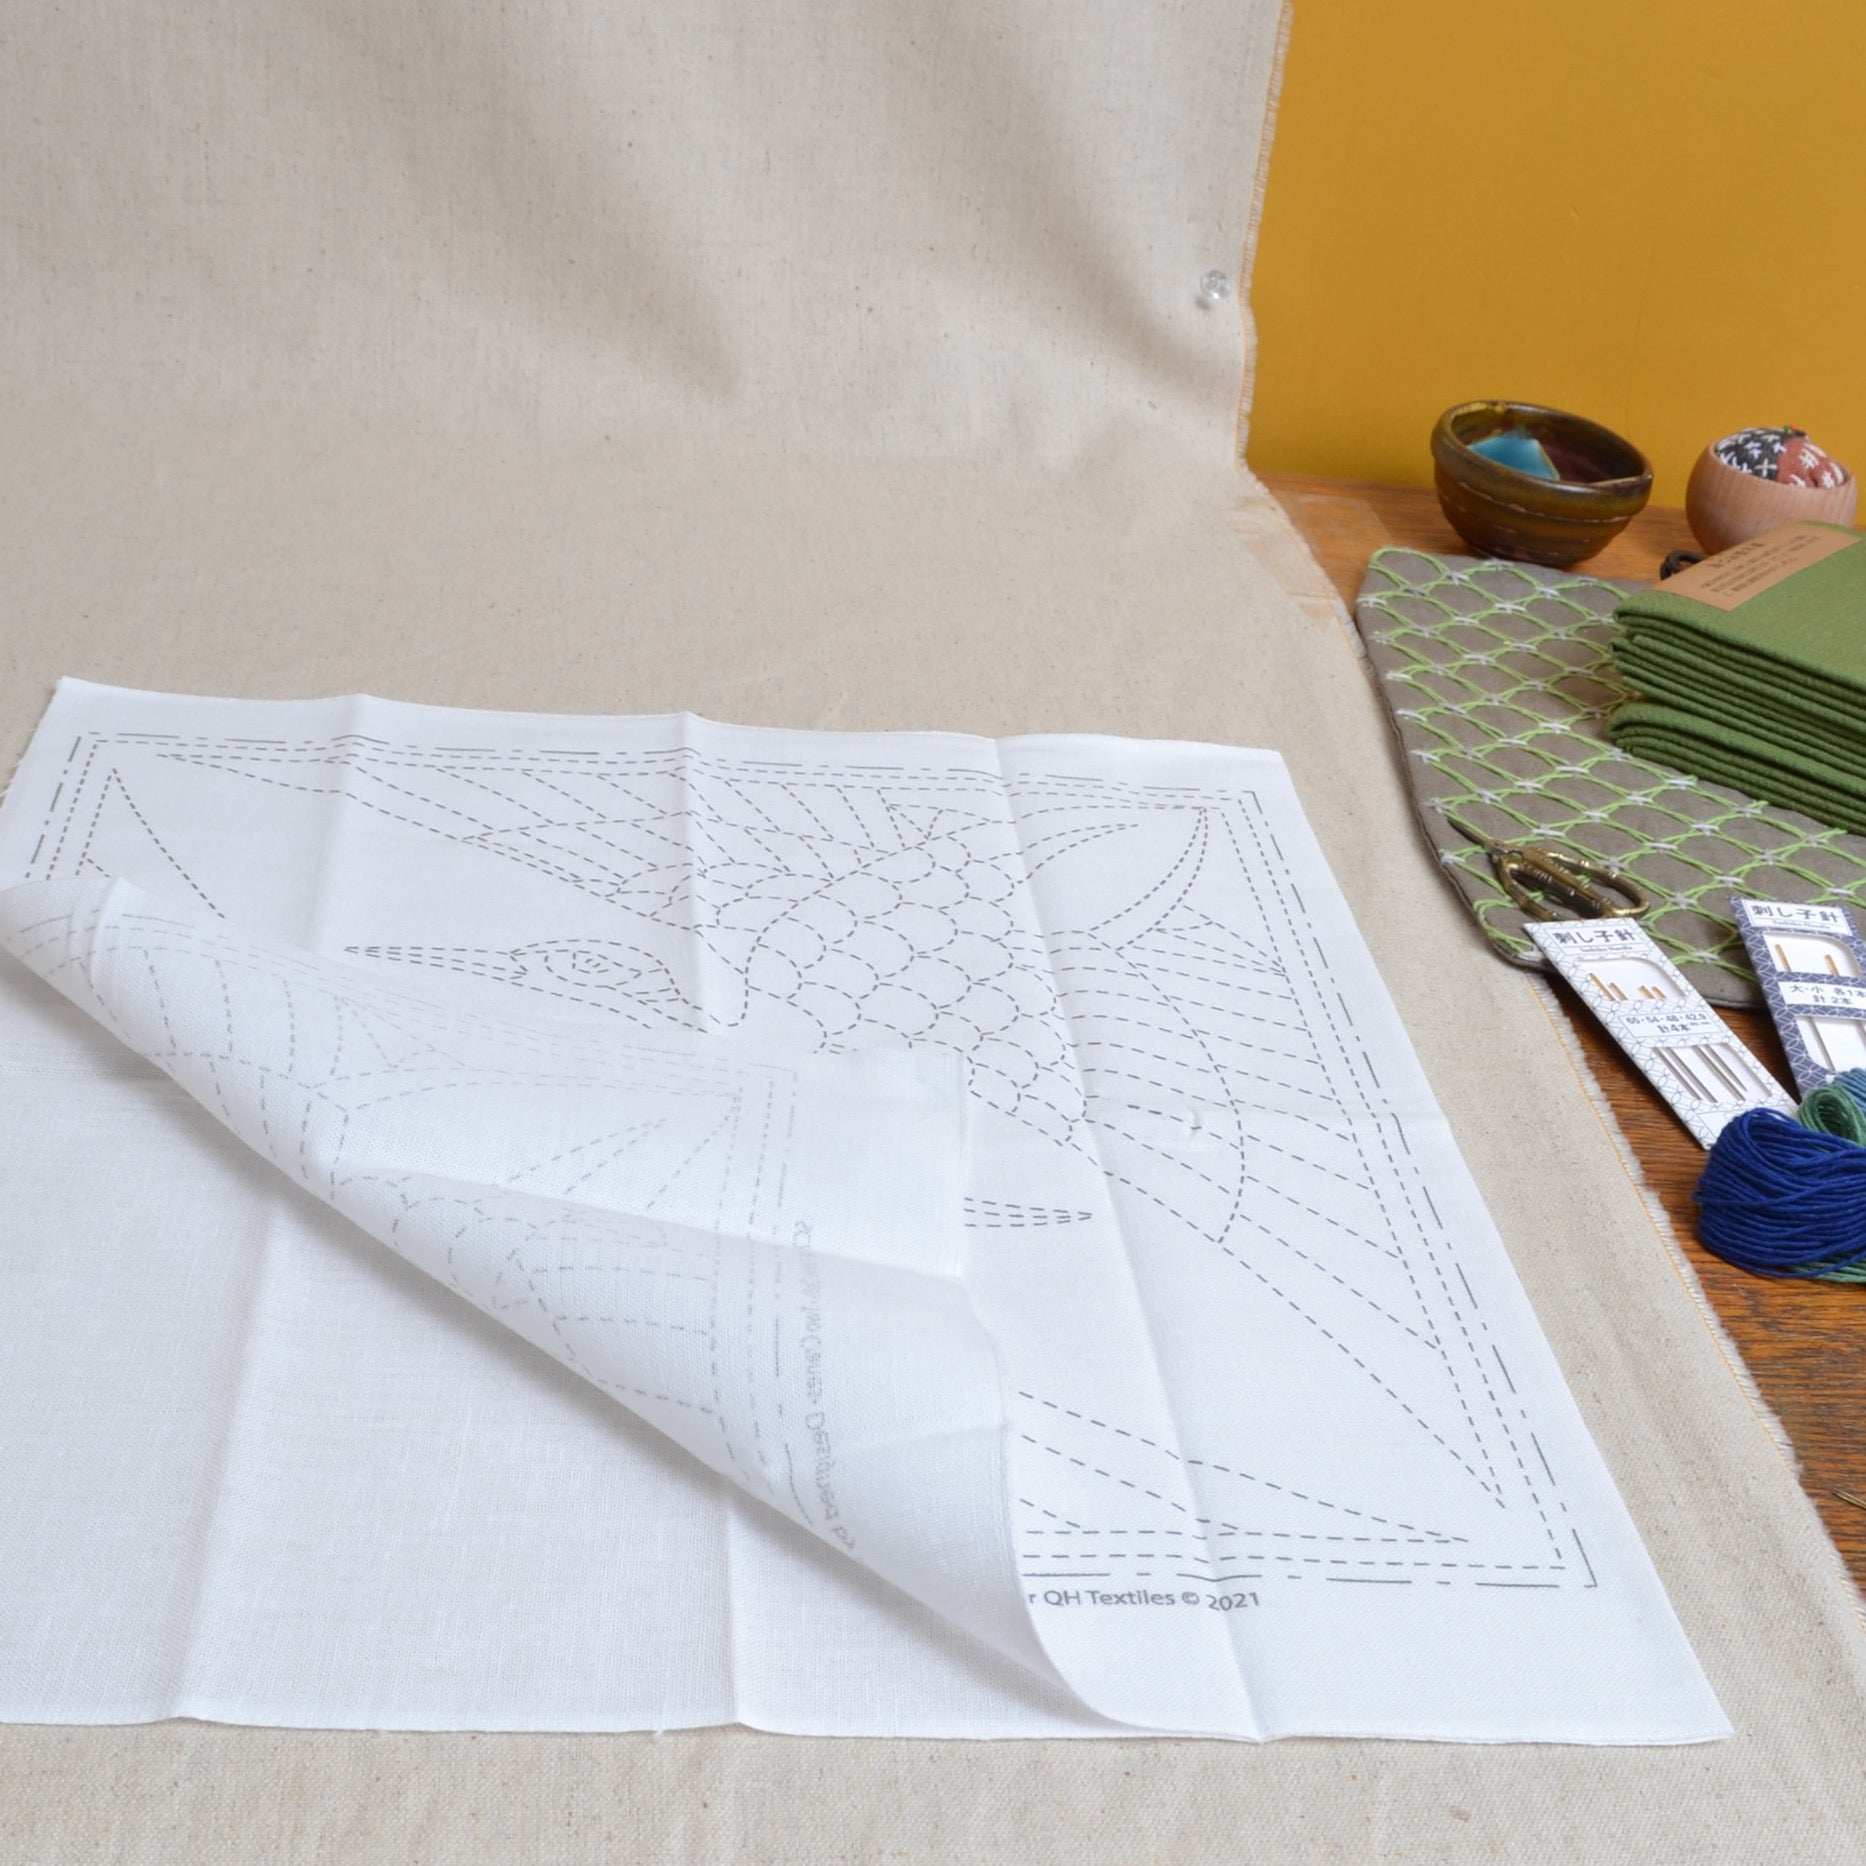 showing both sides of ready to stitch sashiko cloth